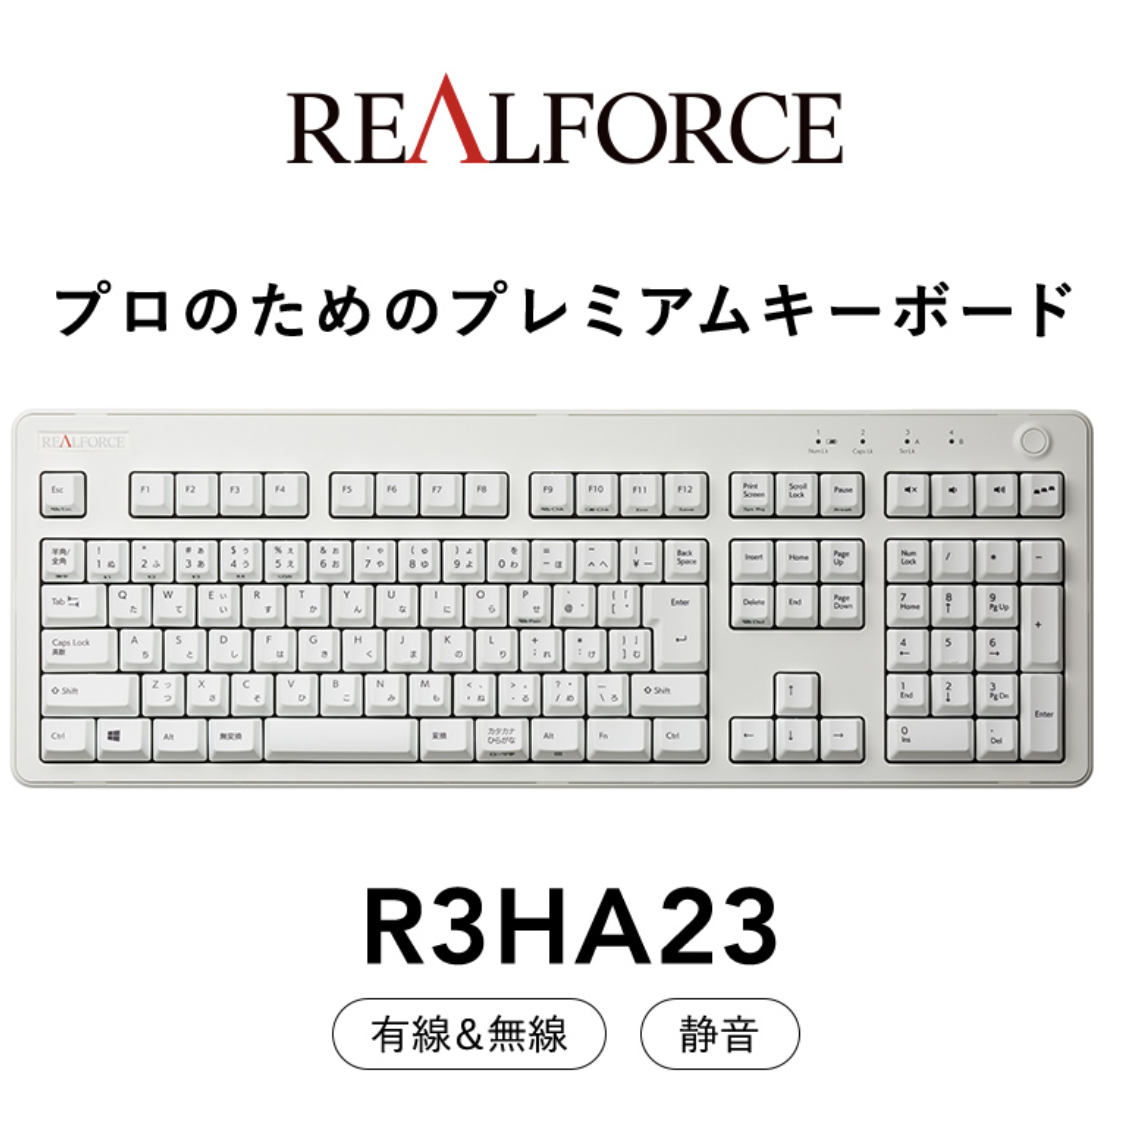 REALFORCE R3HA23 スーパーホワイト 日本語配列 昇華印刷 キー荷重ALL30g